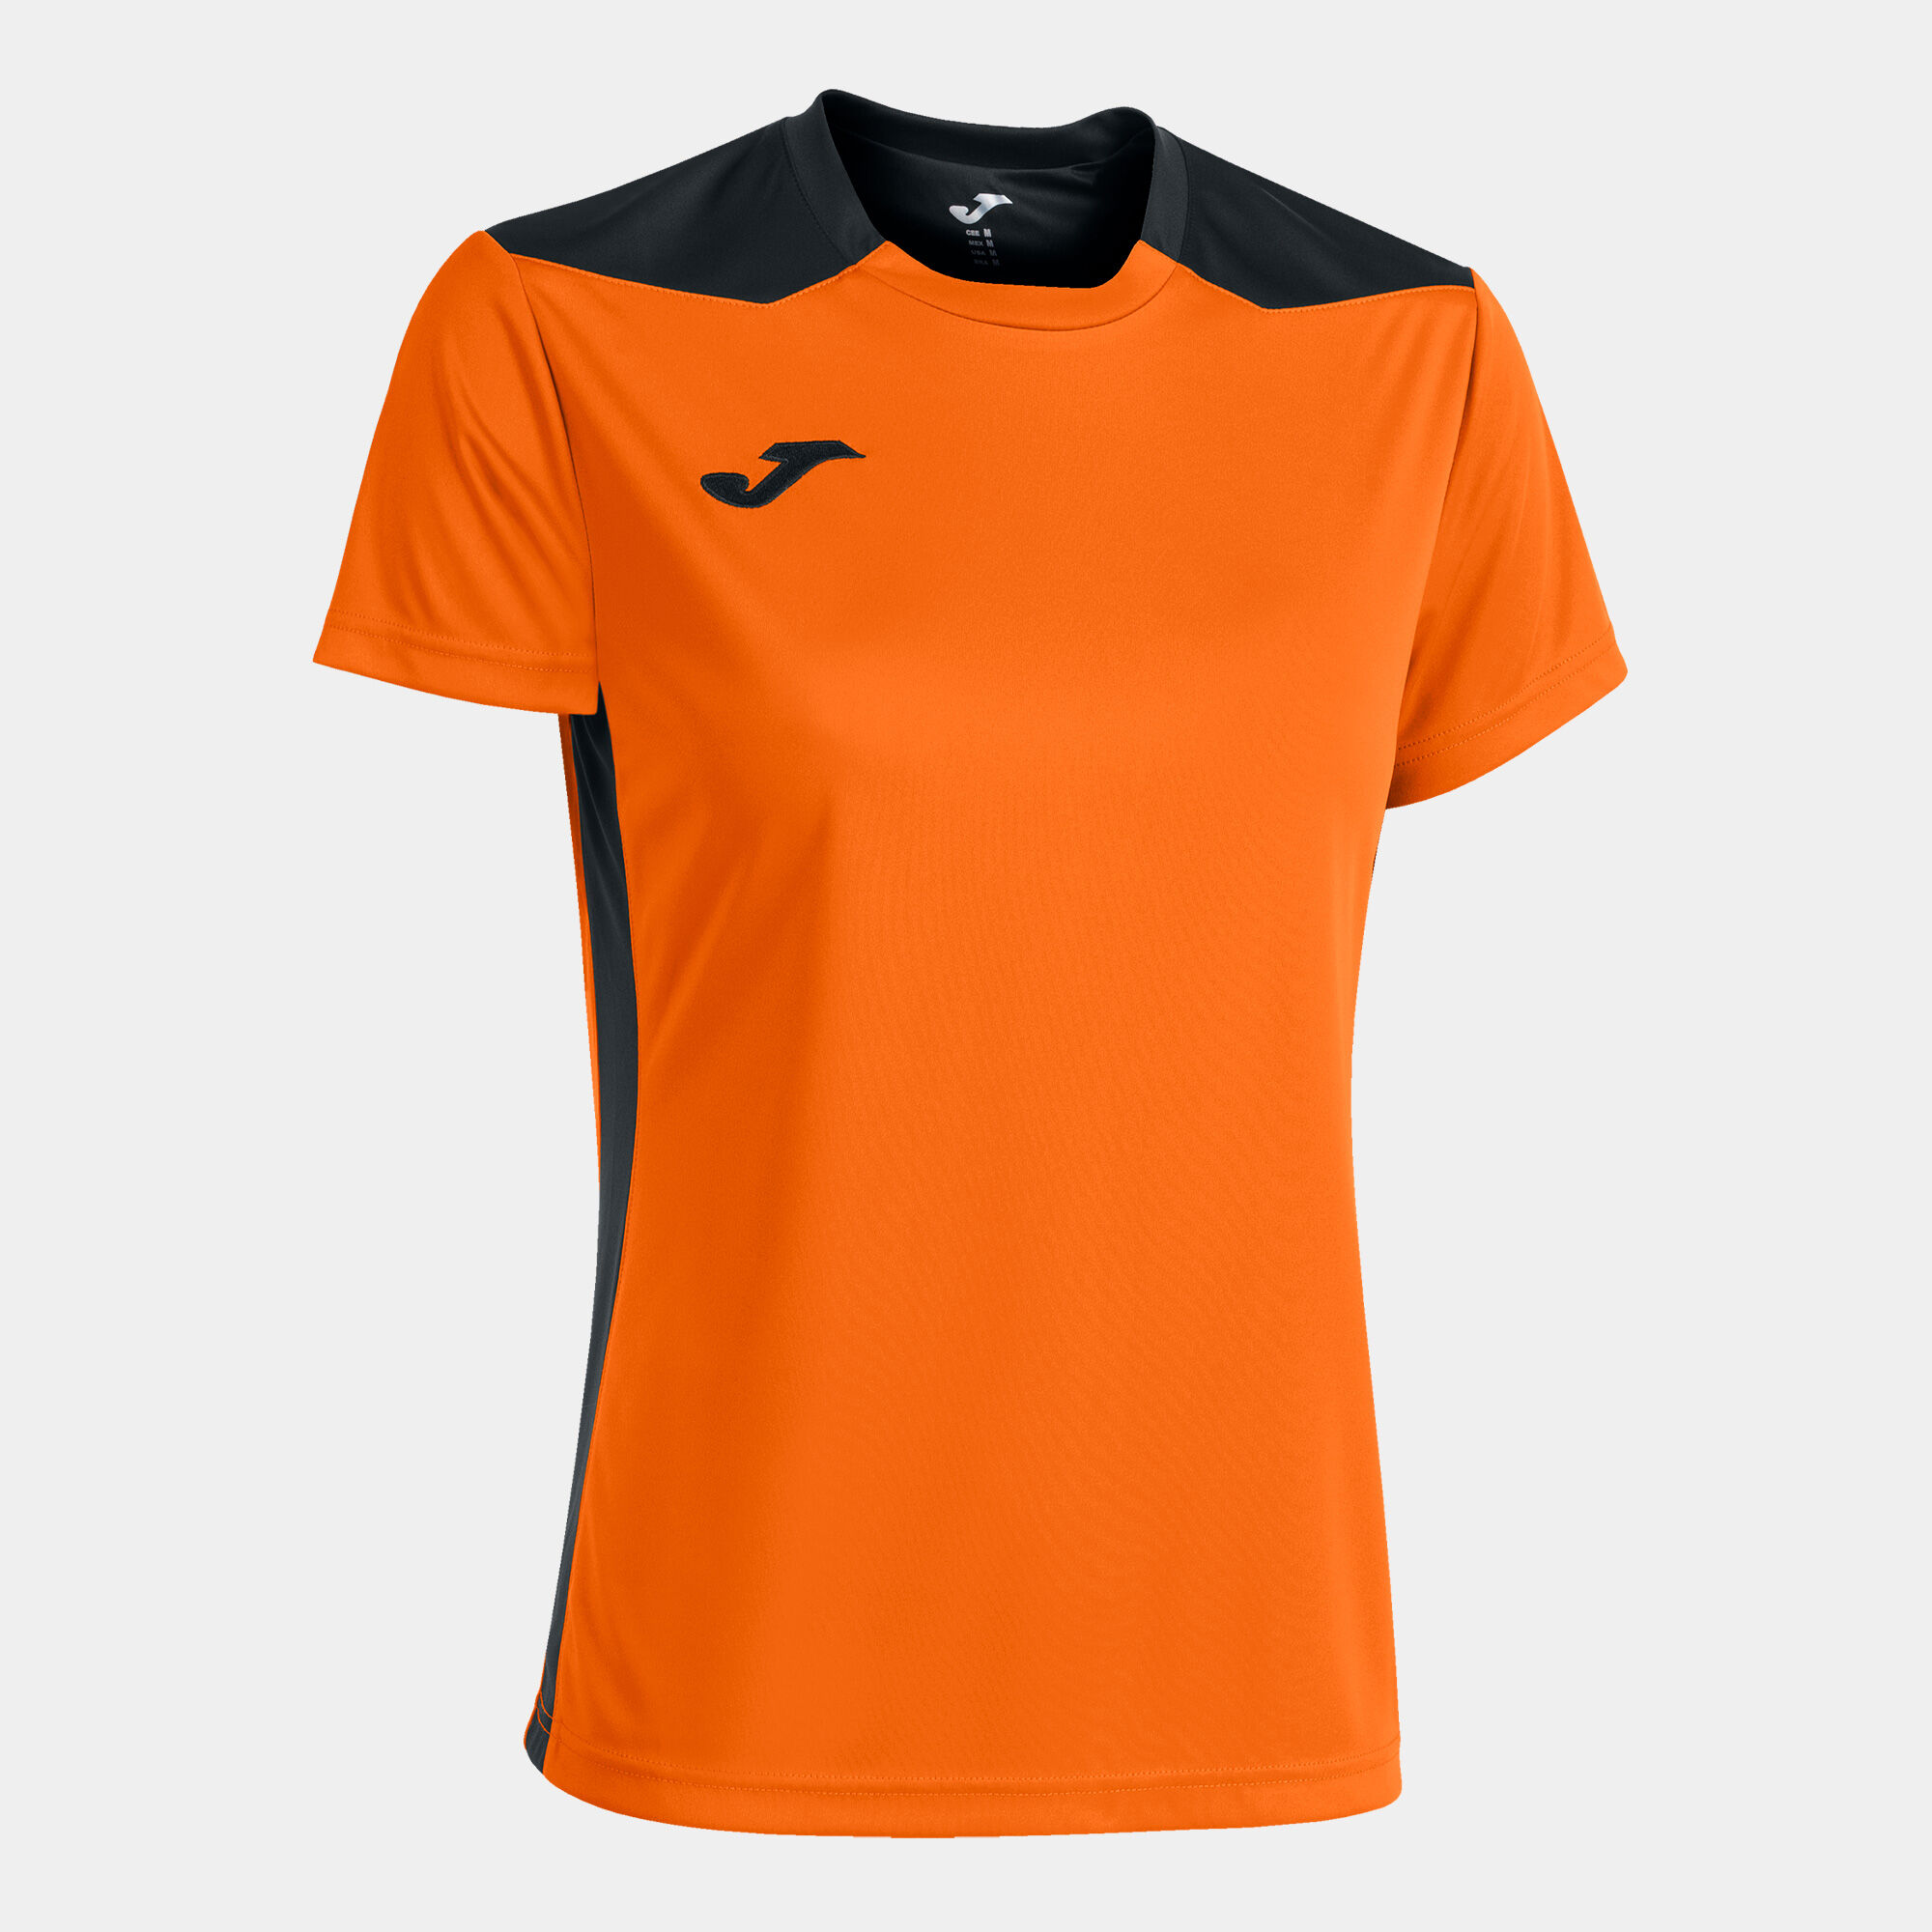 Kurzarmshirt frau Championship VI orange schwarz